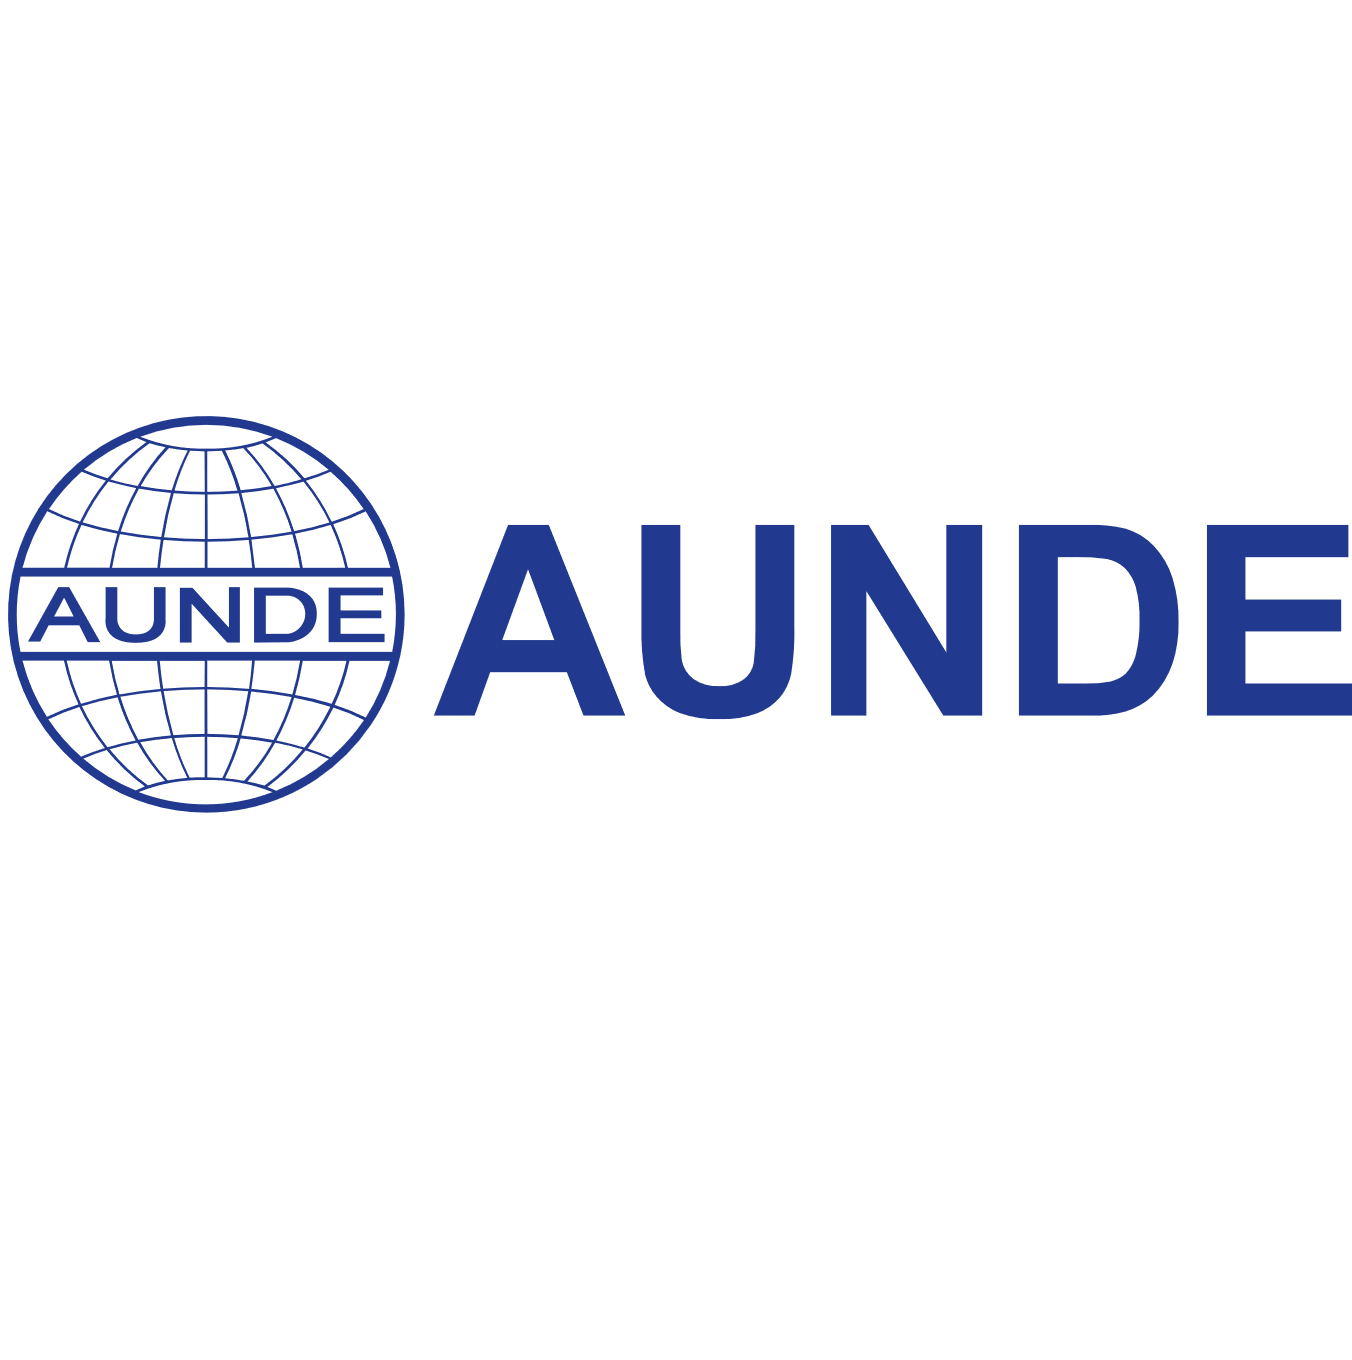 Entreprise AUNDE - Fabricant de textile de Mönchengladbach